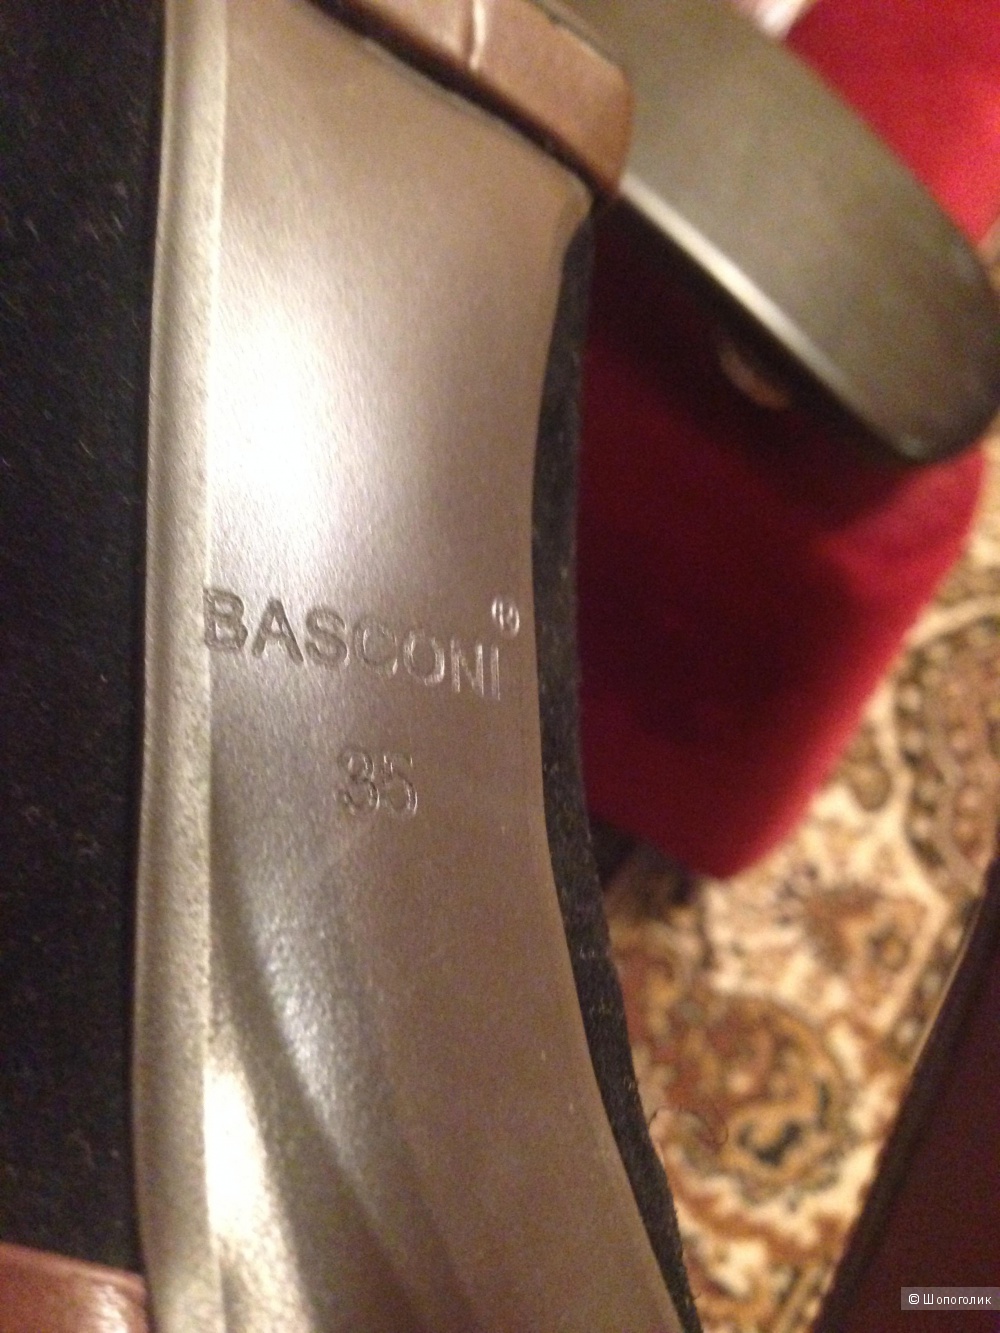 Туфли Basconi, 35 размер